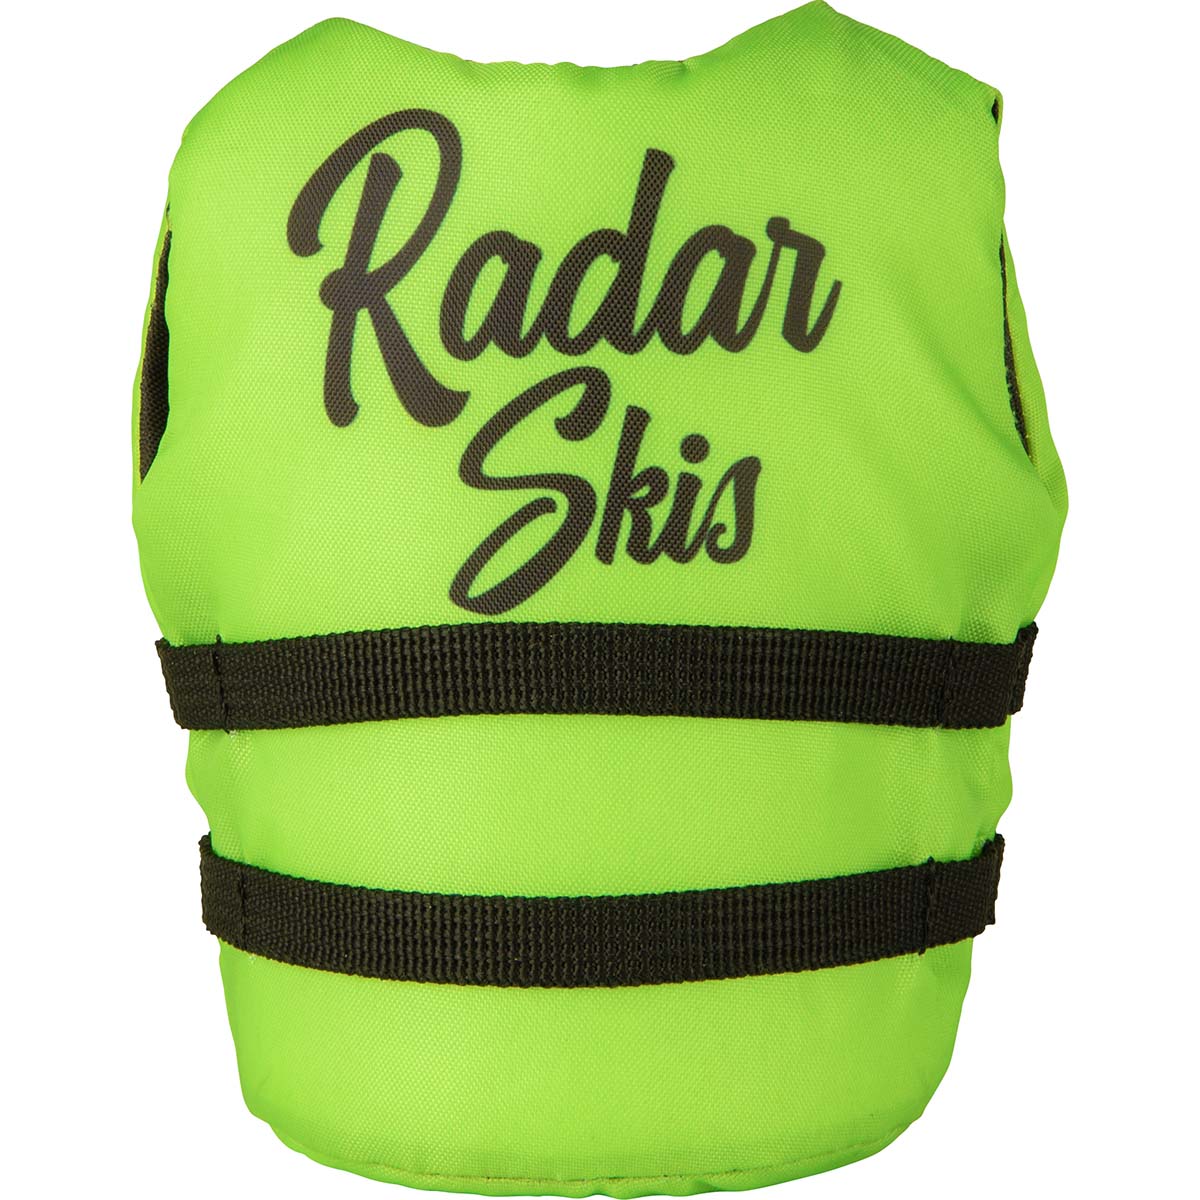 Radar Coldy-Holdy Life Vest - BoardCo